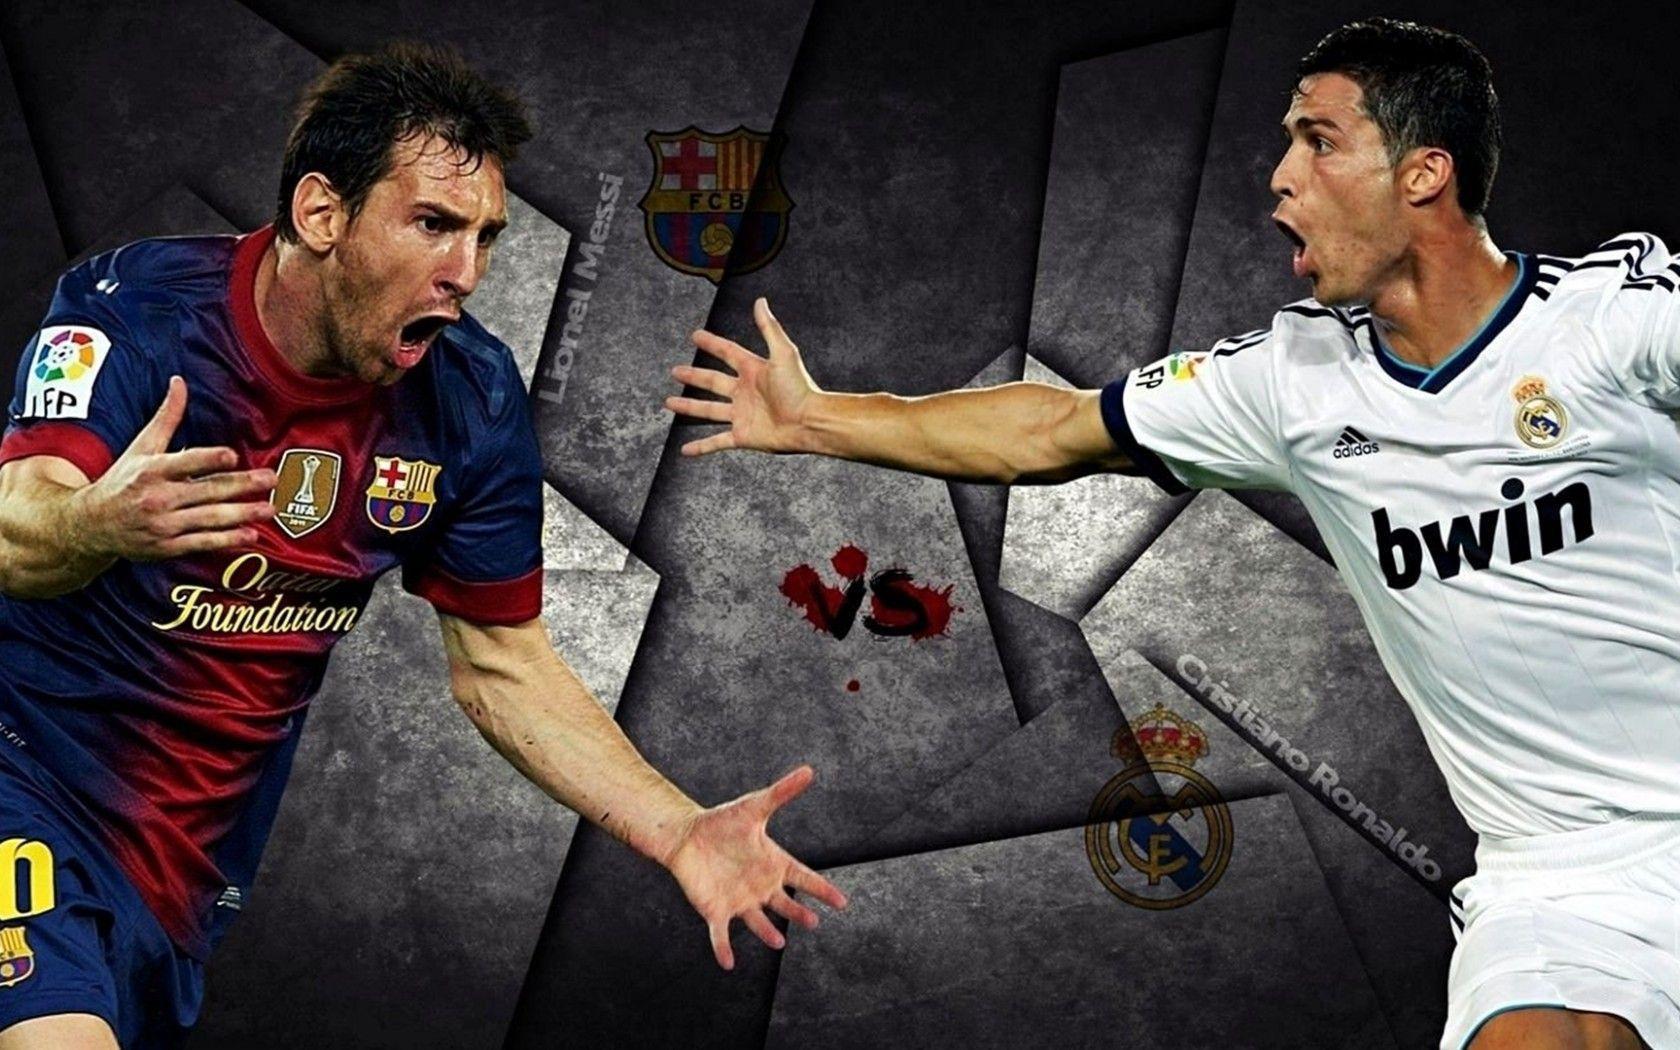 Messi Vs Ronaldo Wallpaper 1080p Sdeerwallpaper. Decor ideas